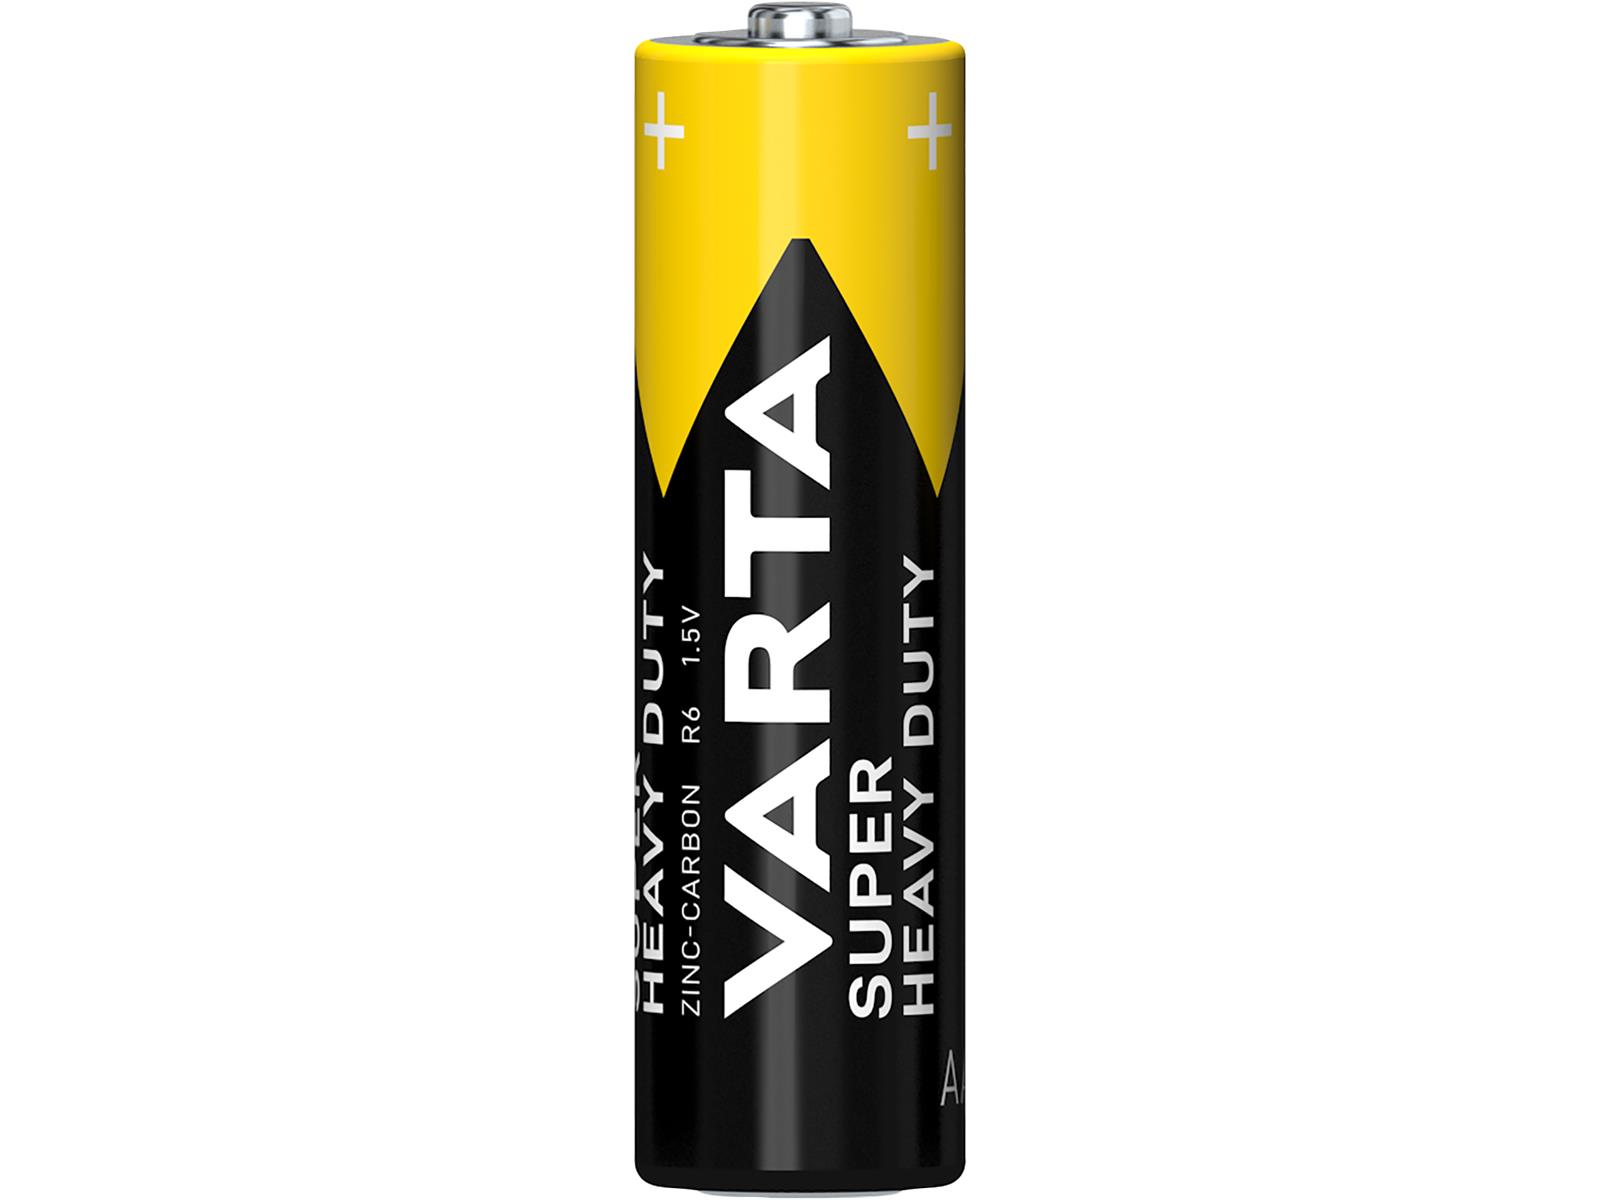 Mignon-Batterie VARTA ''Superlife'' Zink-Chlorid, Typ AA, 1,5V, 4er-Blister